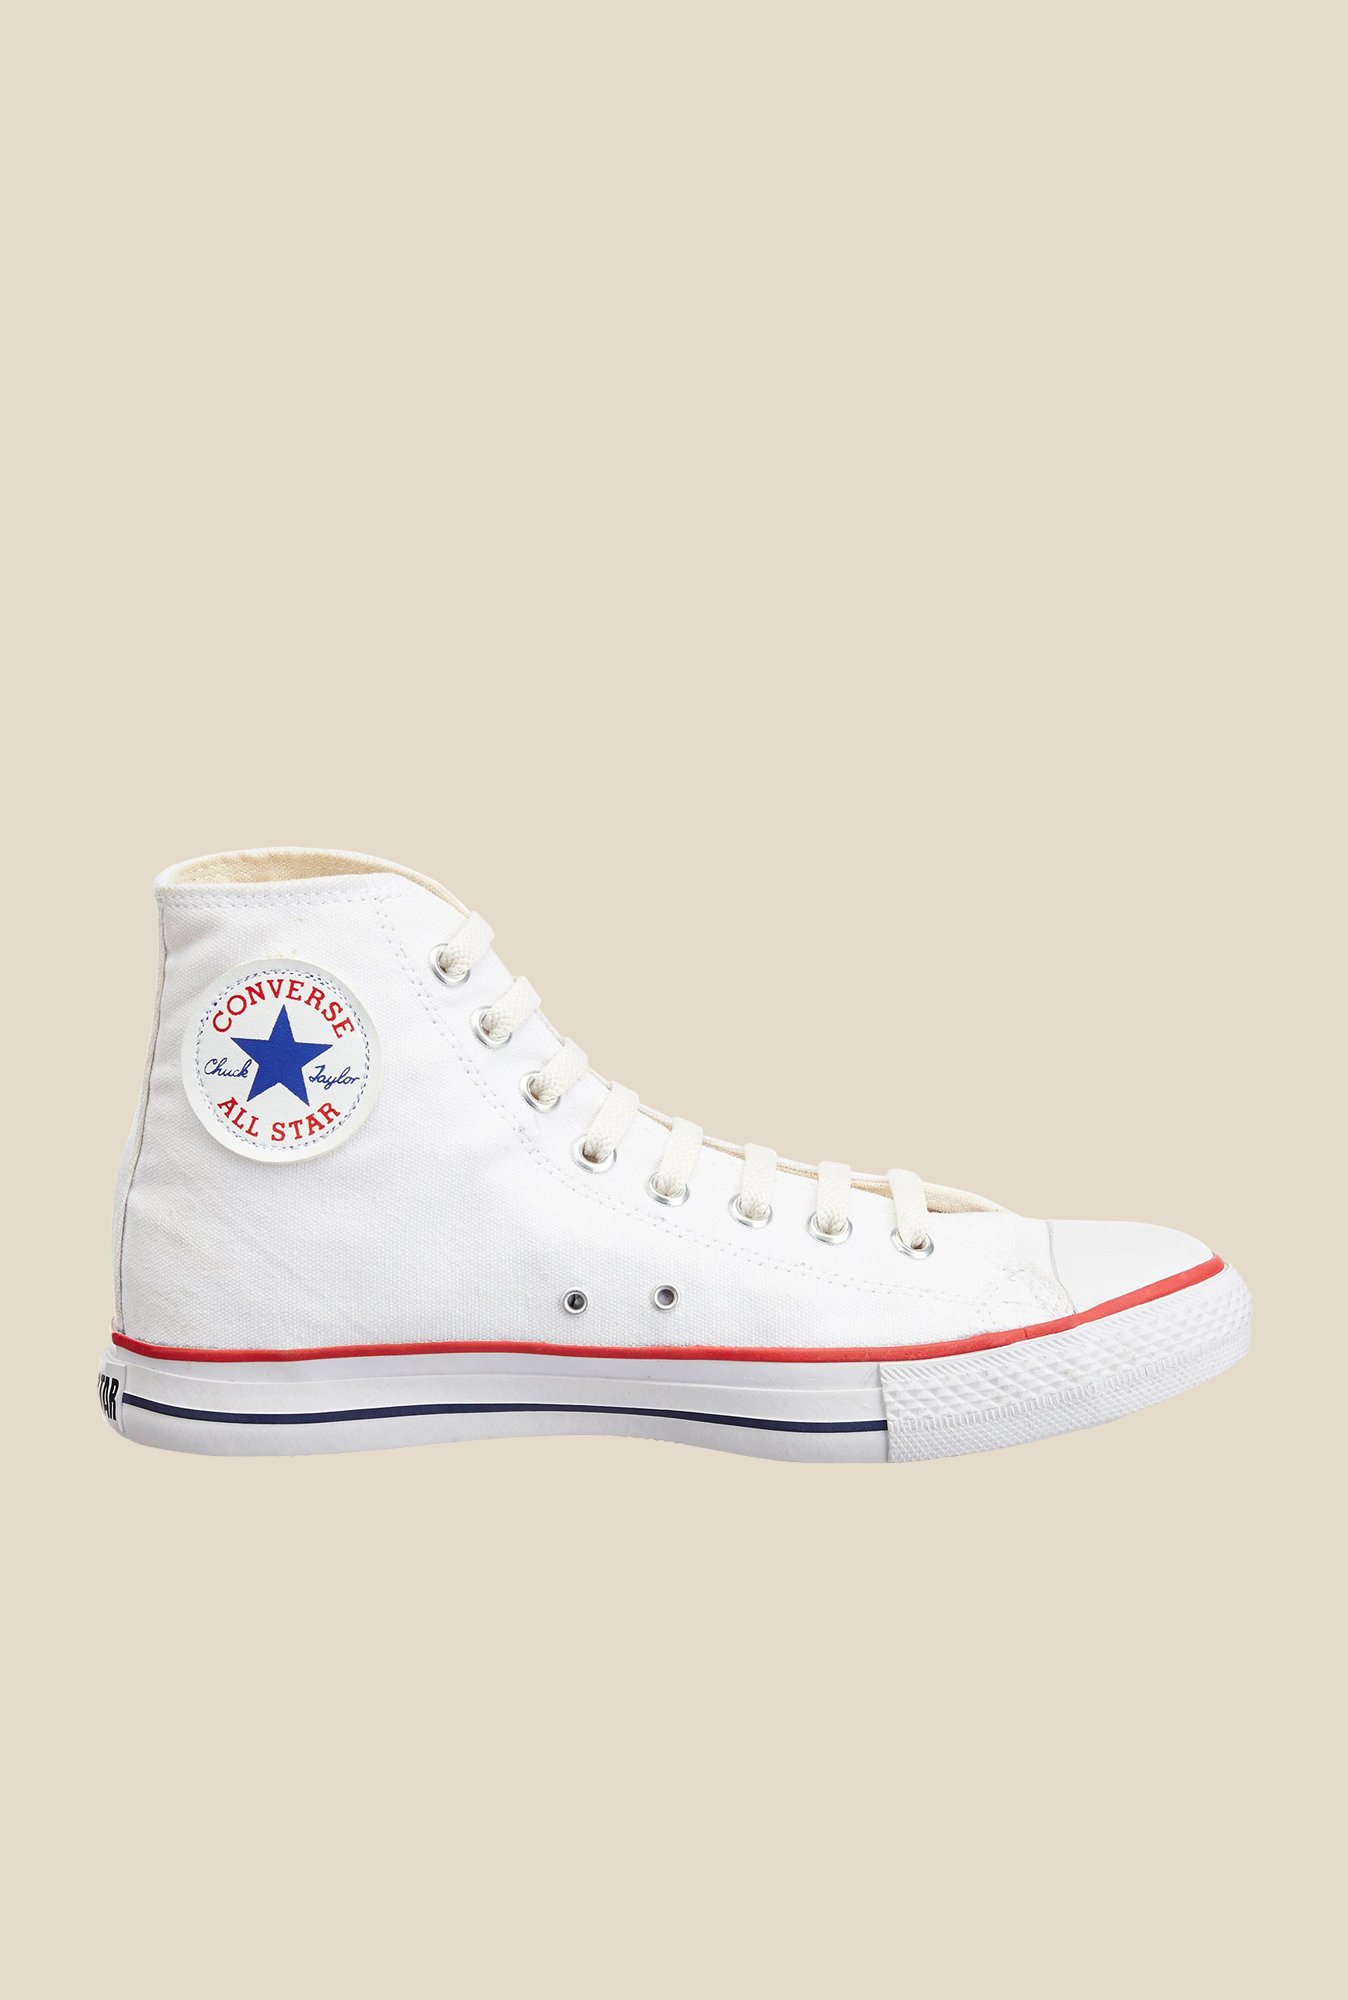 buy white converse